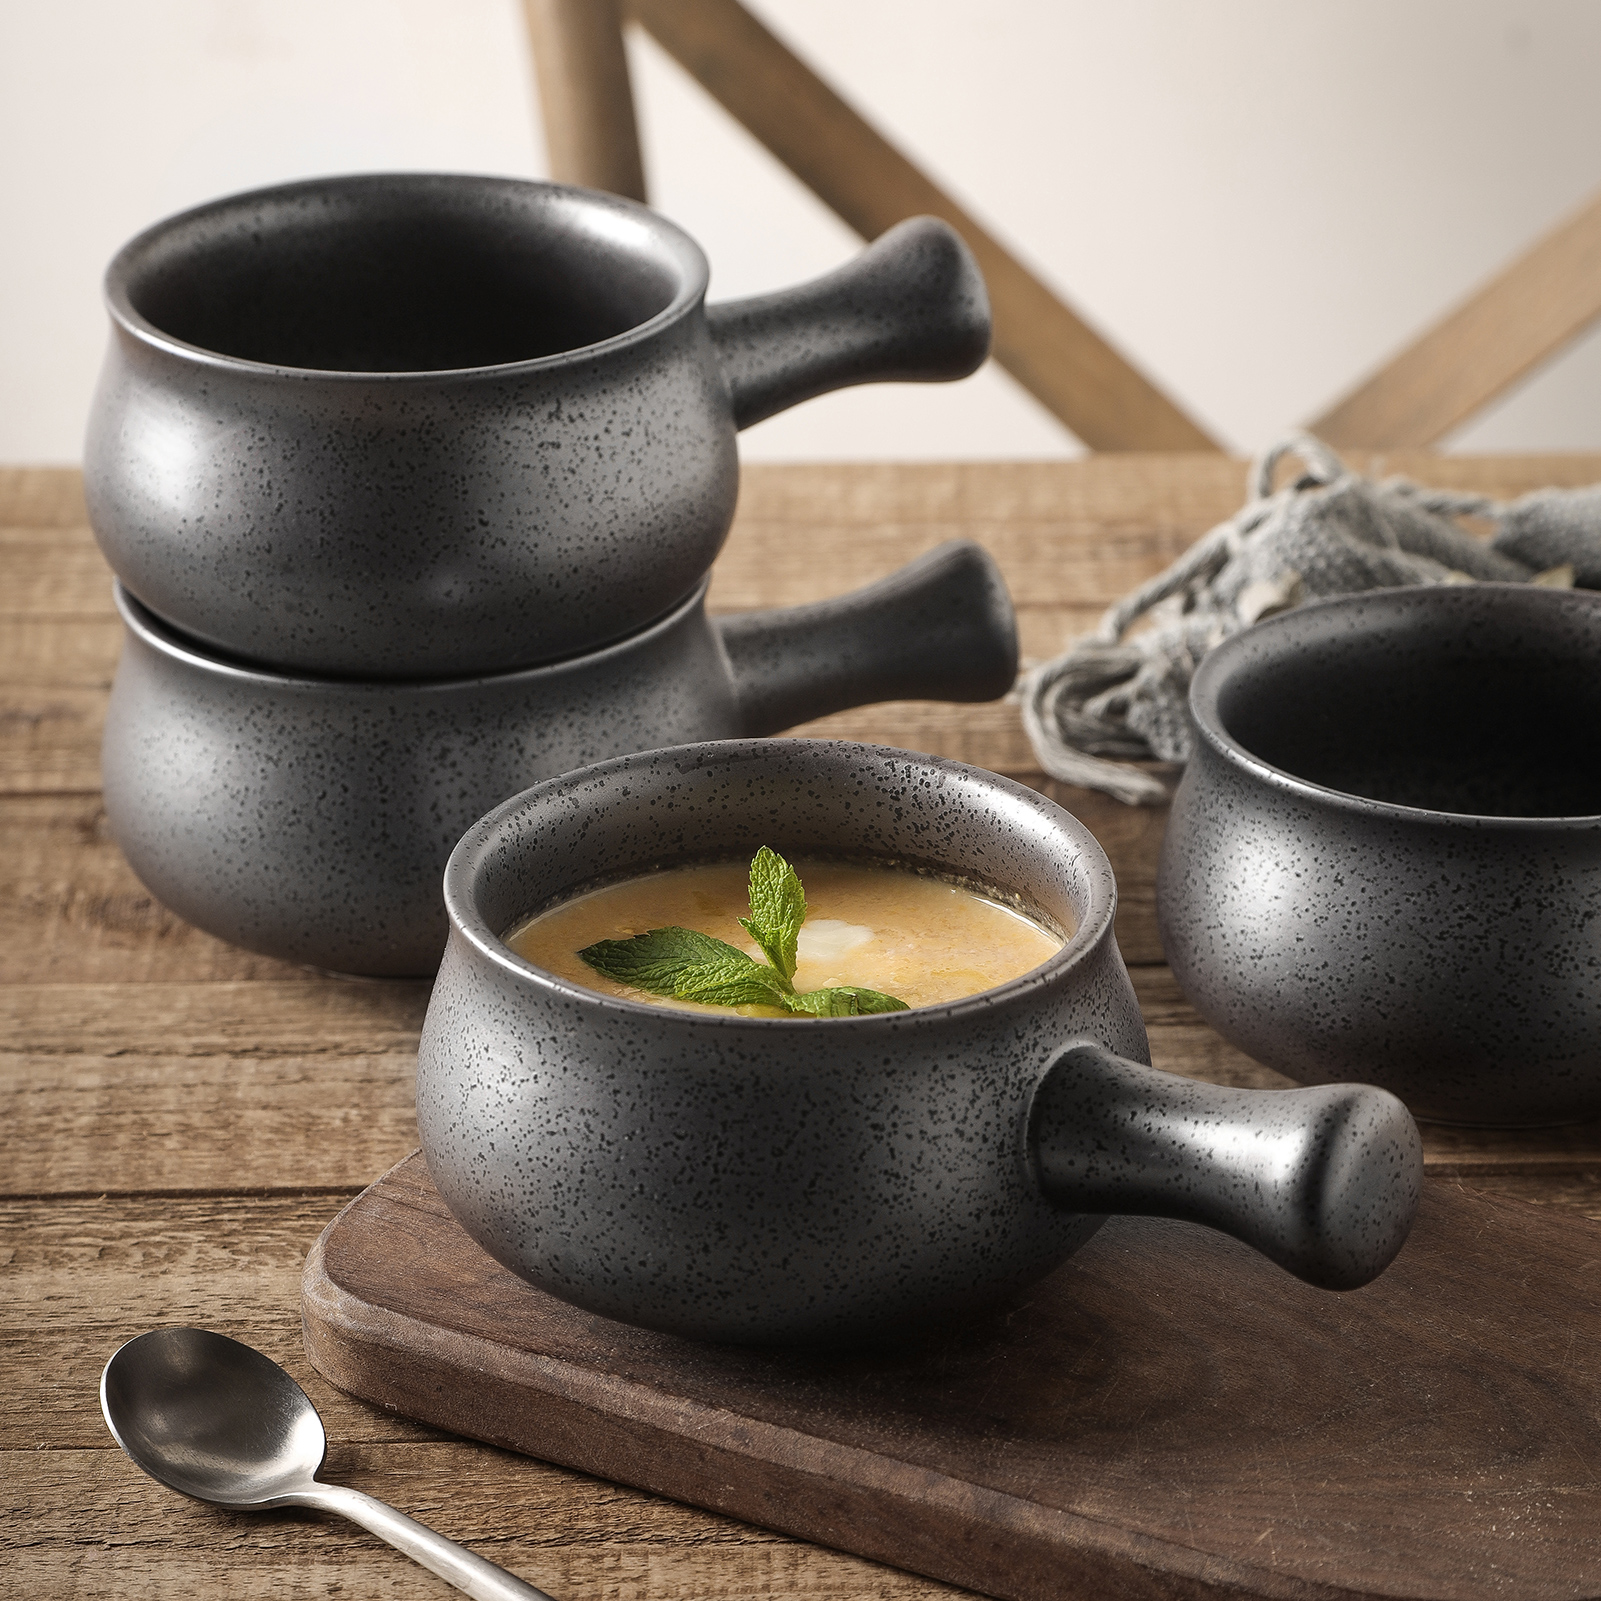 https://www.vicrays.com/wp-content/uploads/2022/03/6-black-soup-bowls-with-handle.jpg